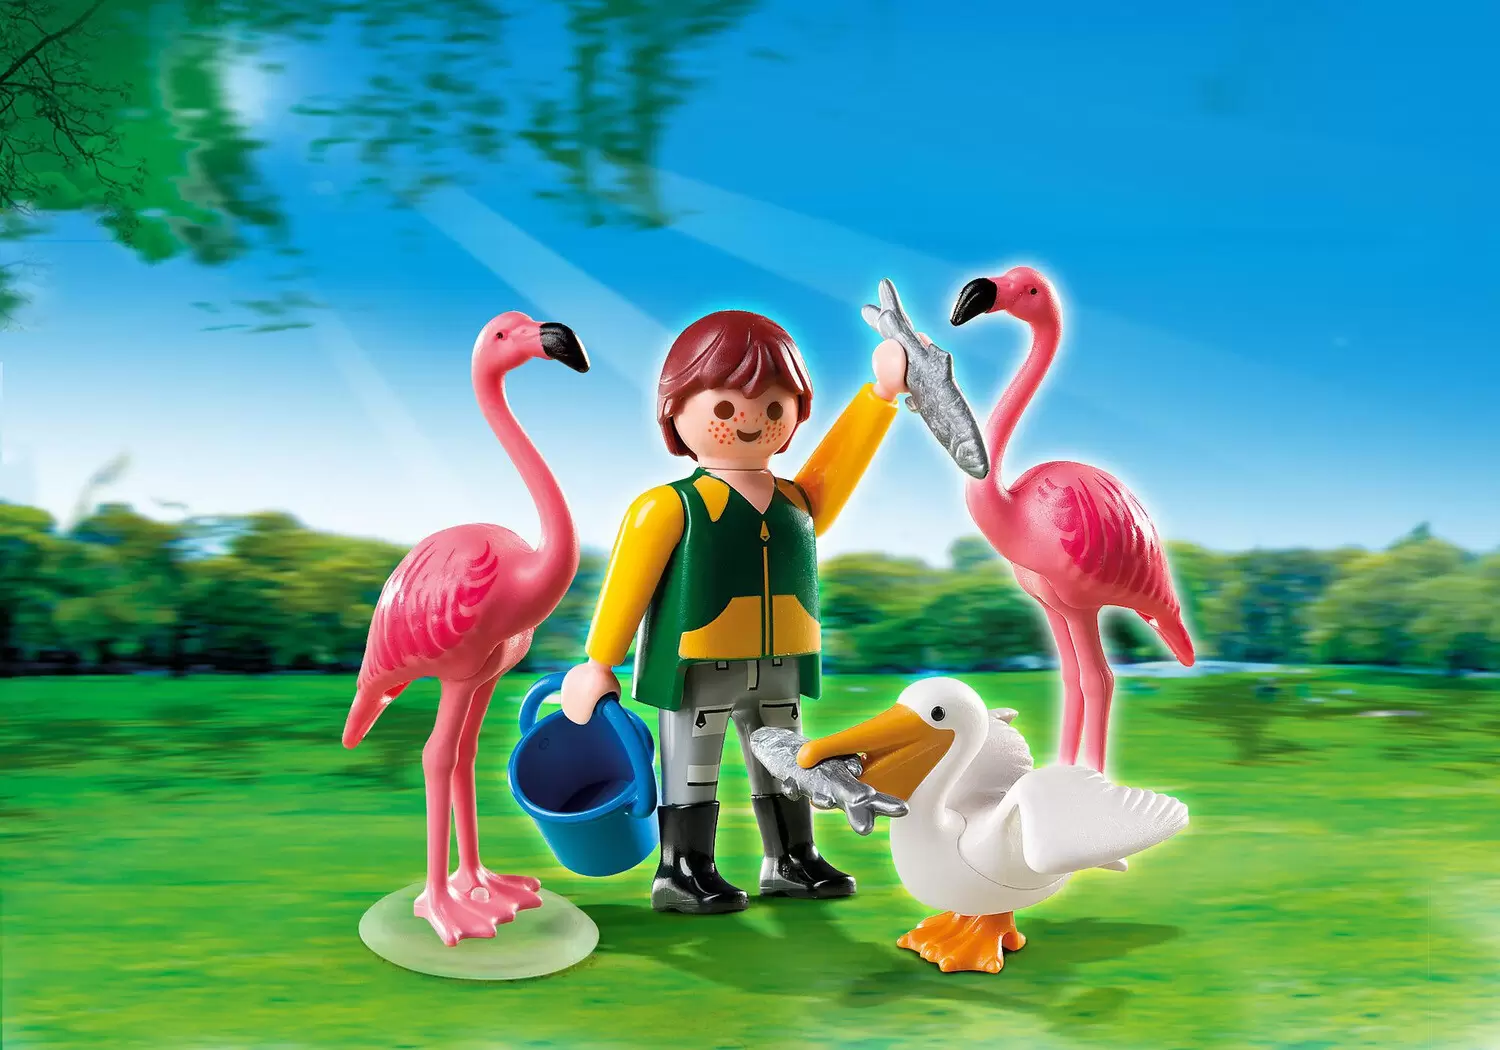 Playmobil SpecialPlus - Gardien de zoo avec flamants roses et pélican